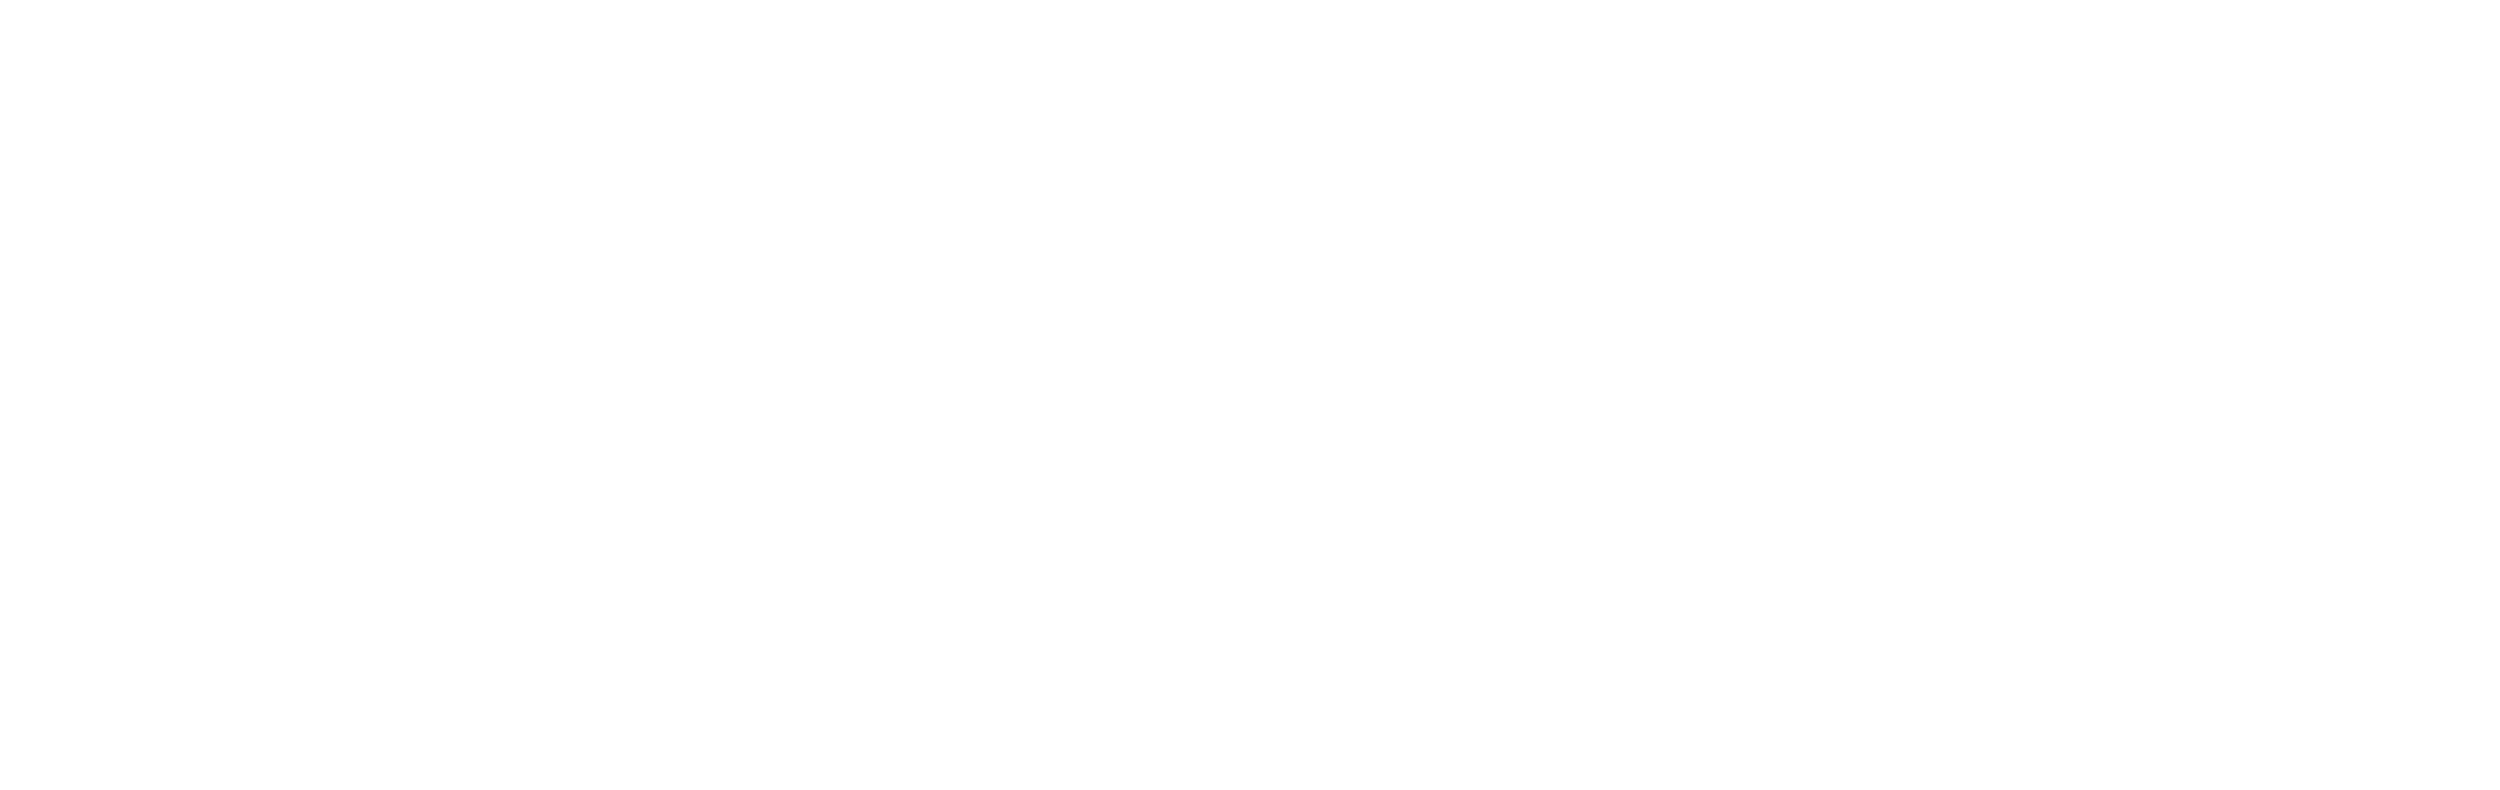 Ridgeview Classical Schools